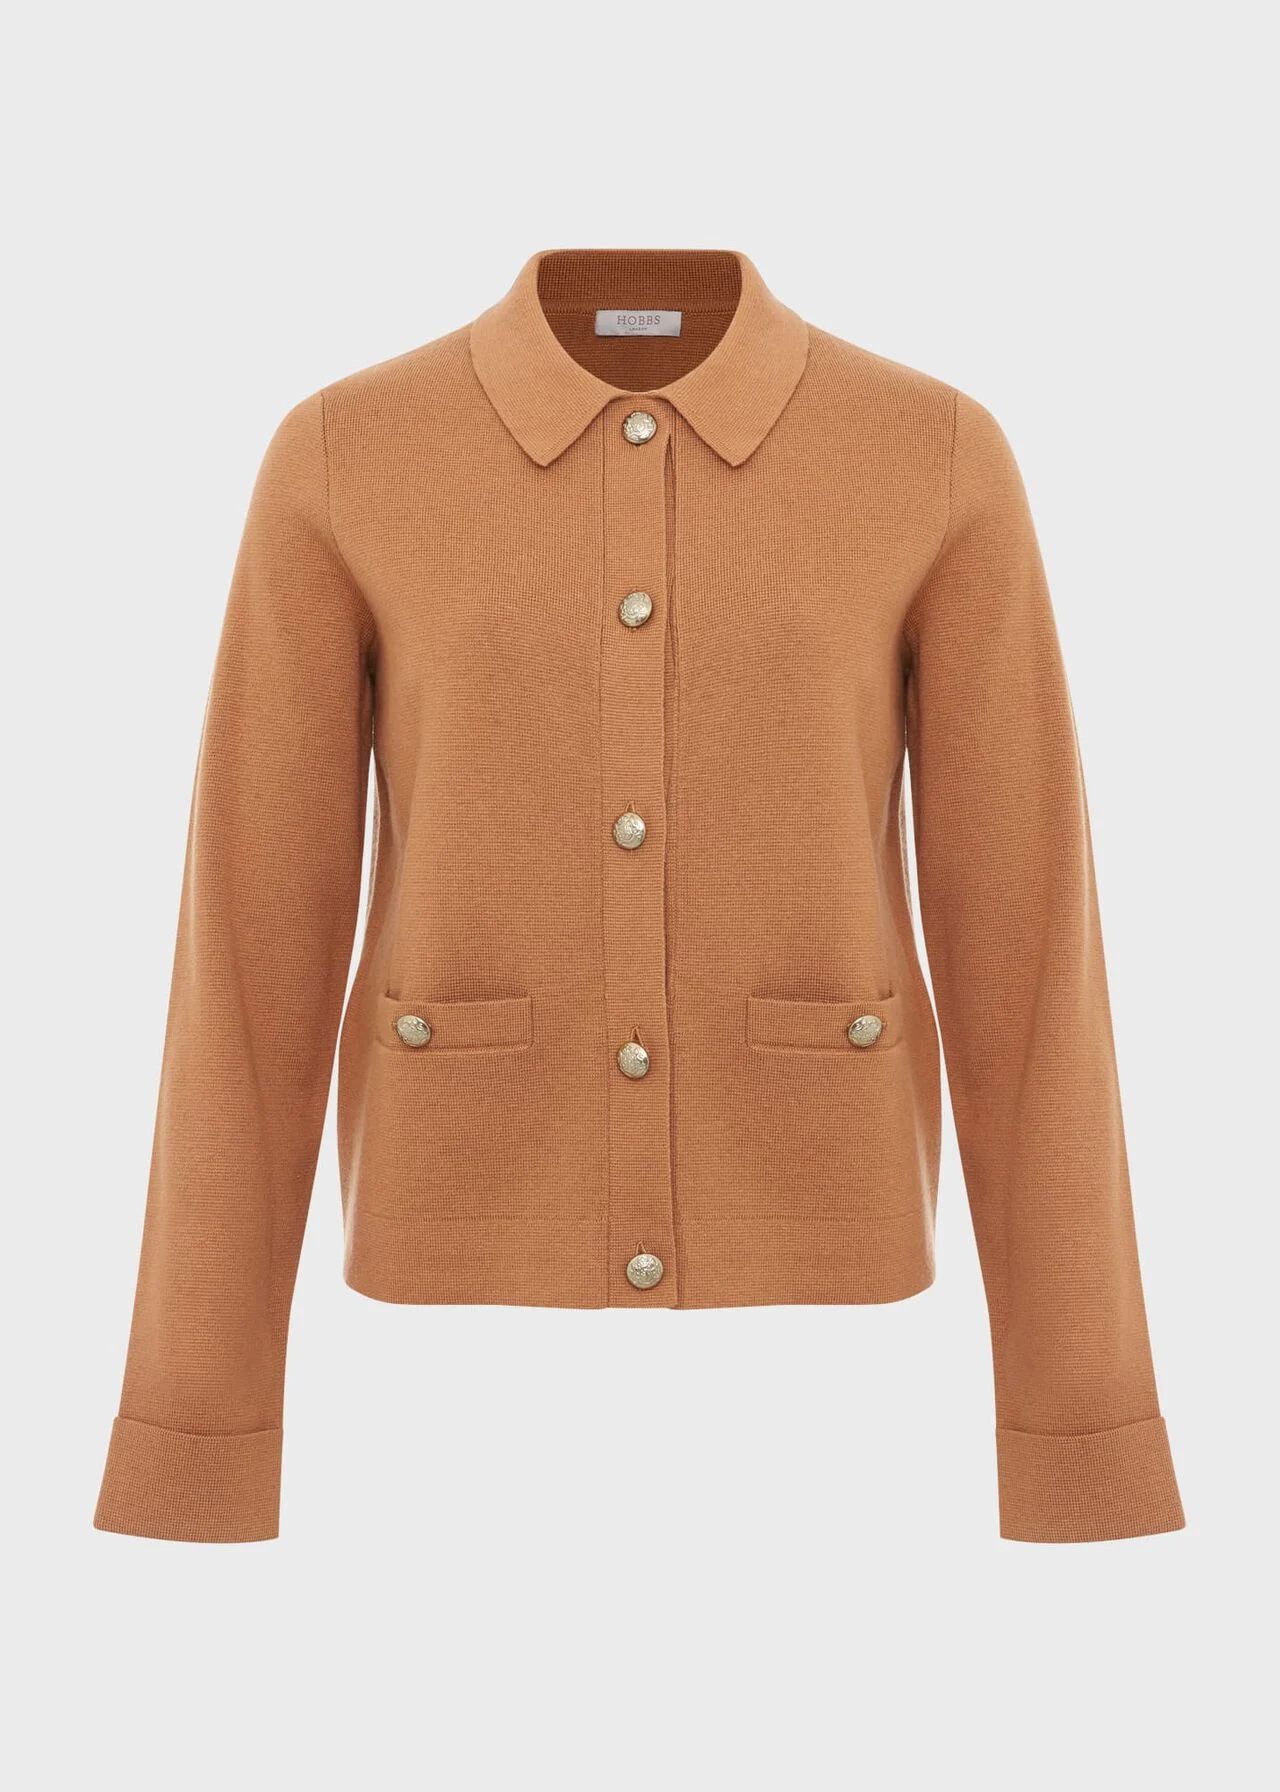 Mora Cotton Wool Knitted Jacket | Hobbs